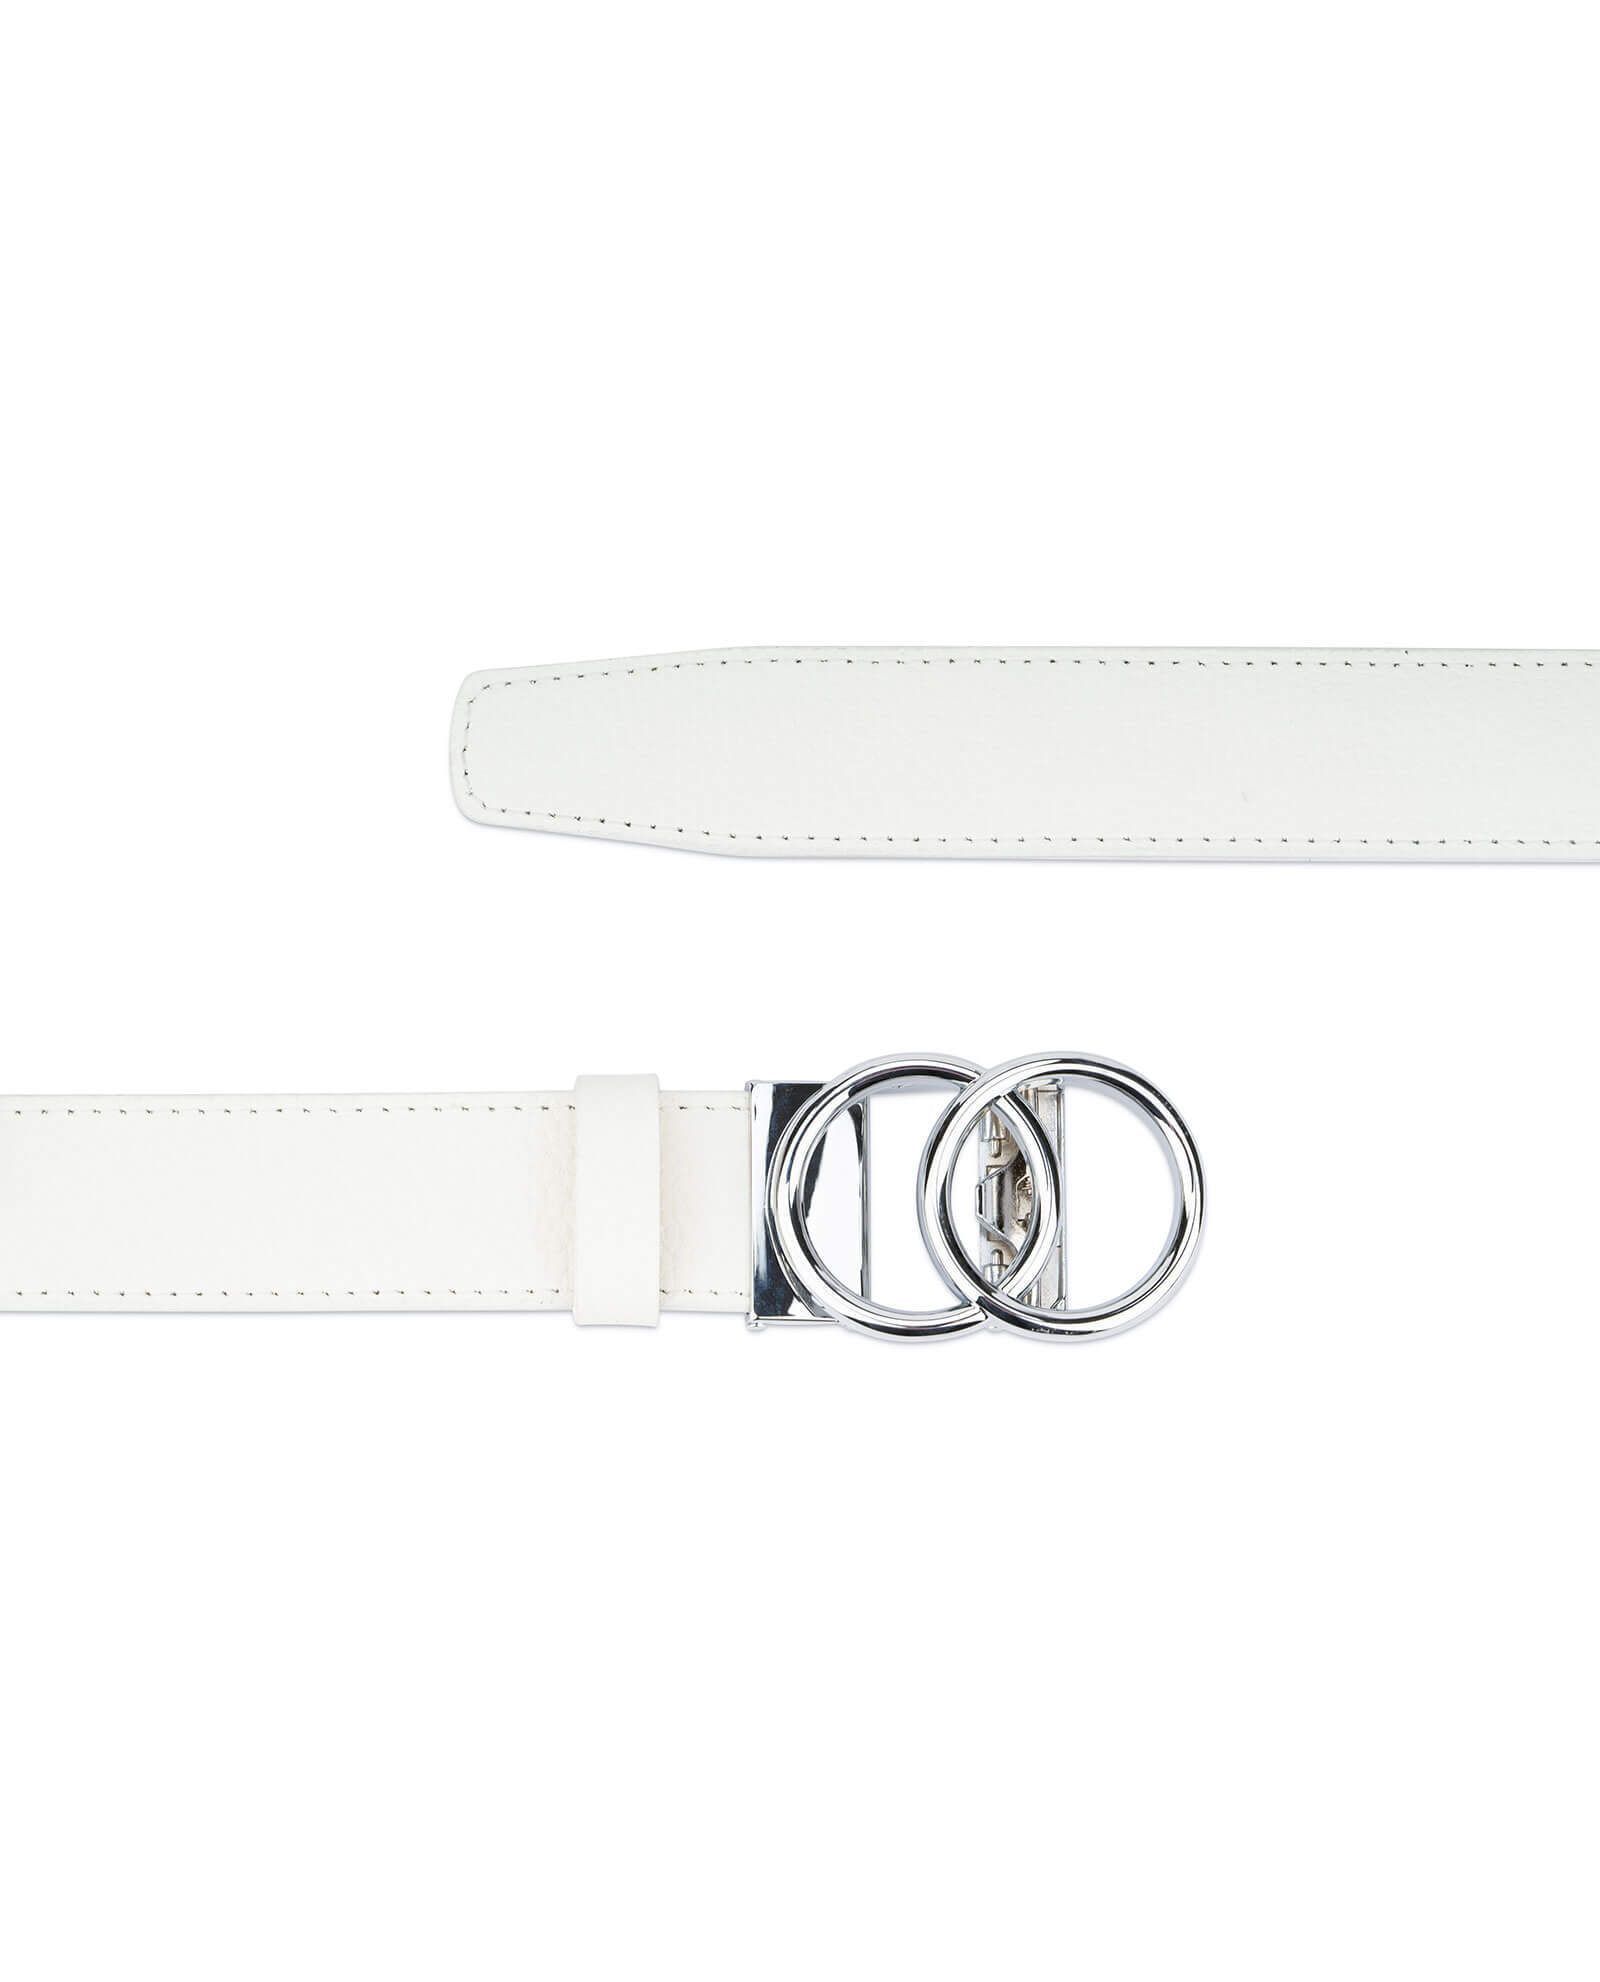 Buy Womens Ratchet Belt With Double Circle Buckle | LeatherBeltsOnline